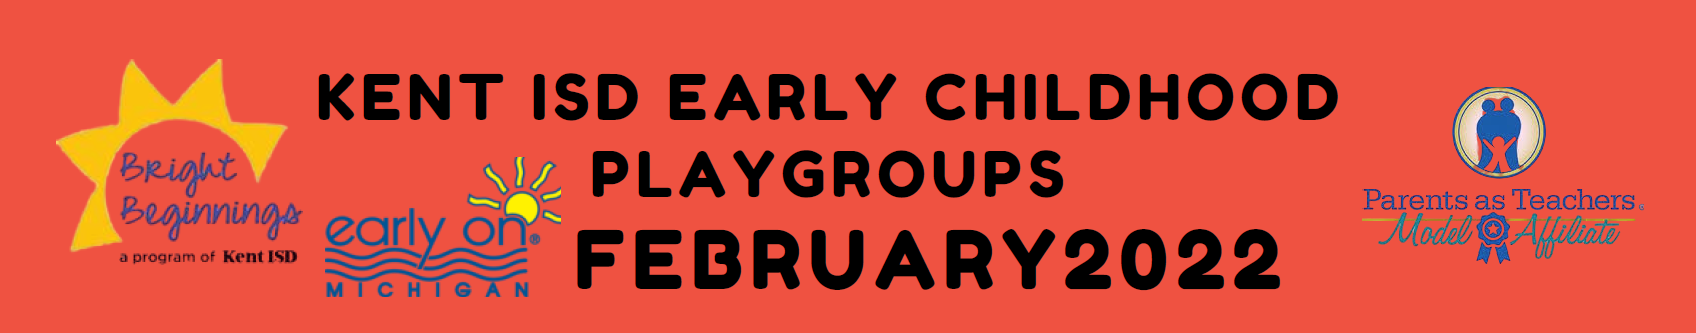 Kent ISD Early Childhood Playgroups February 2022